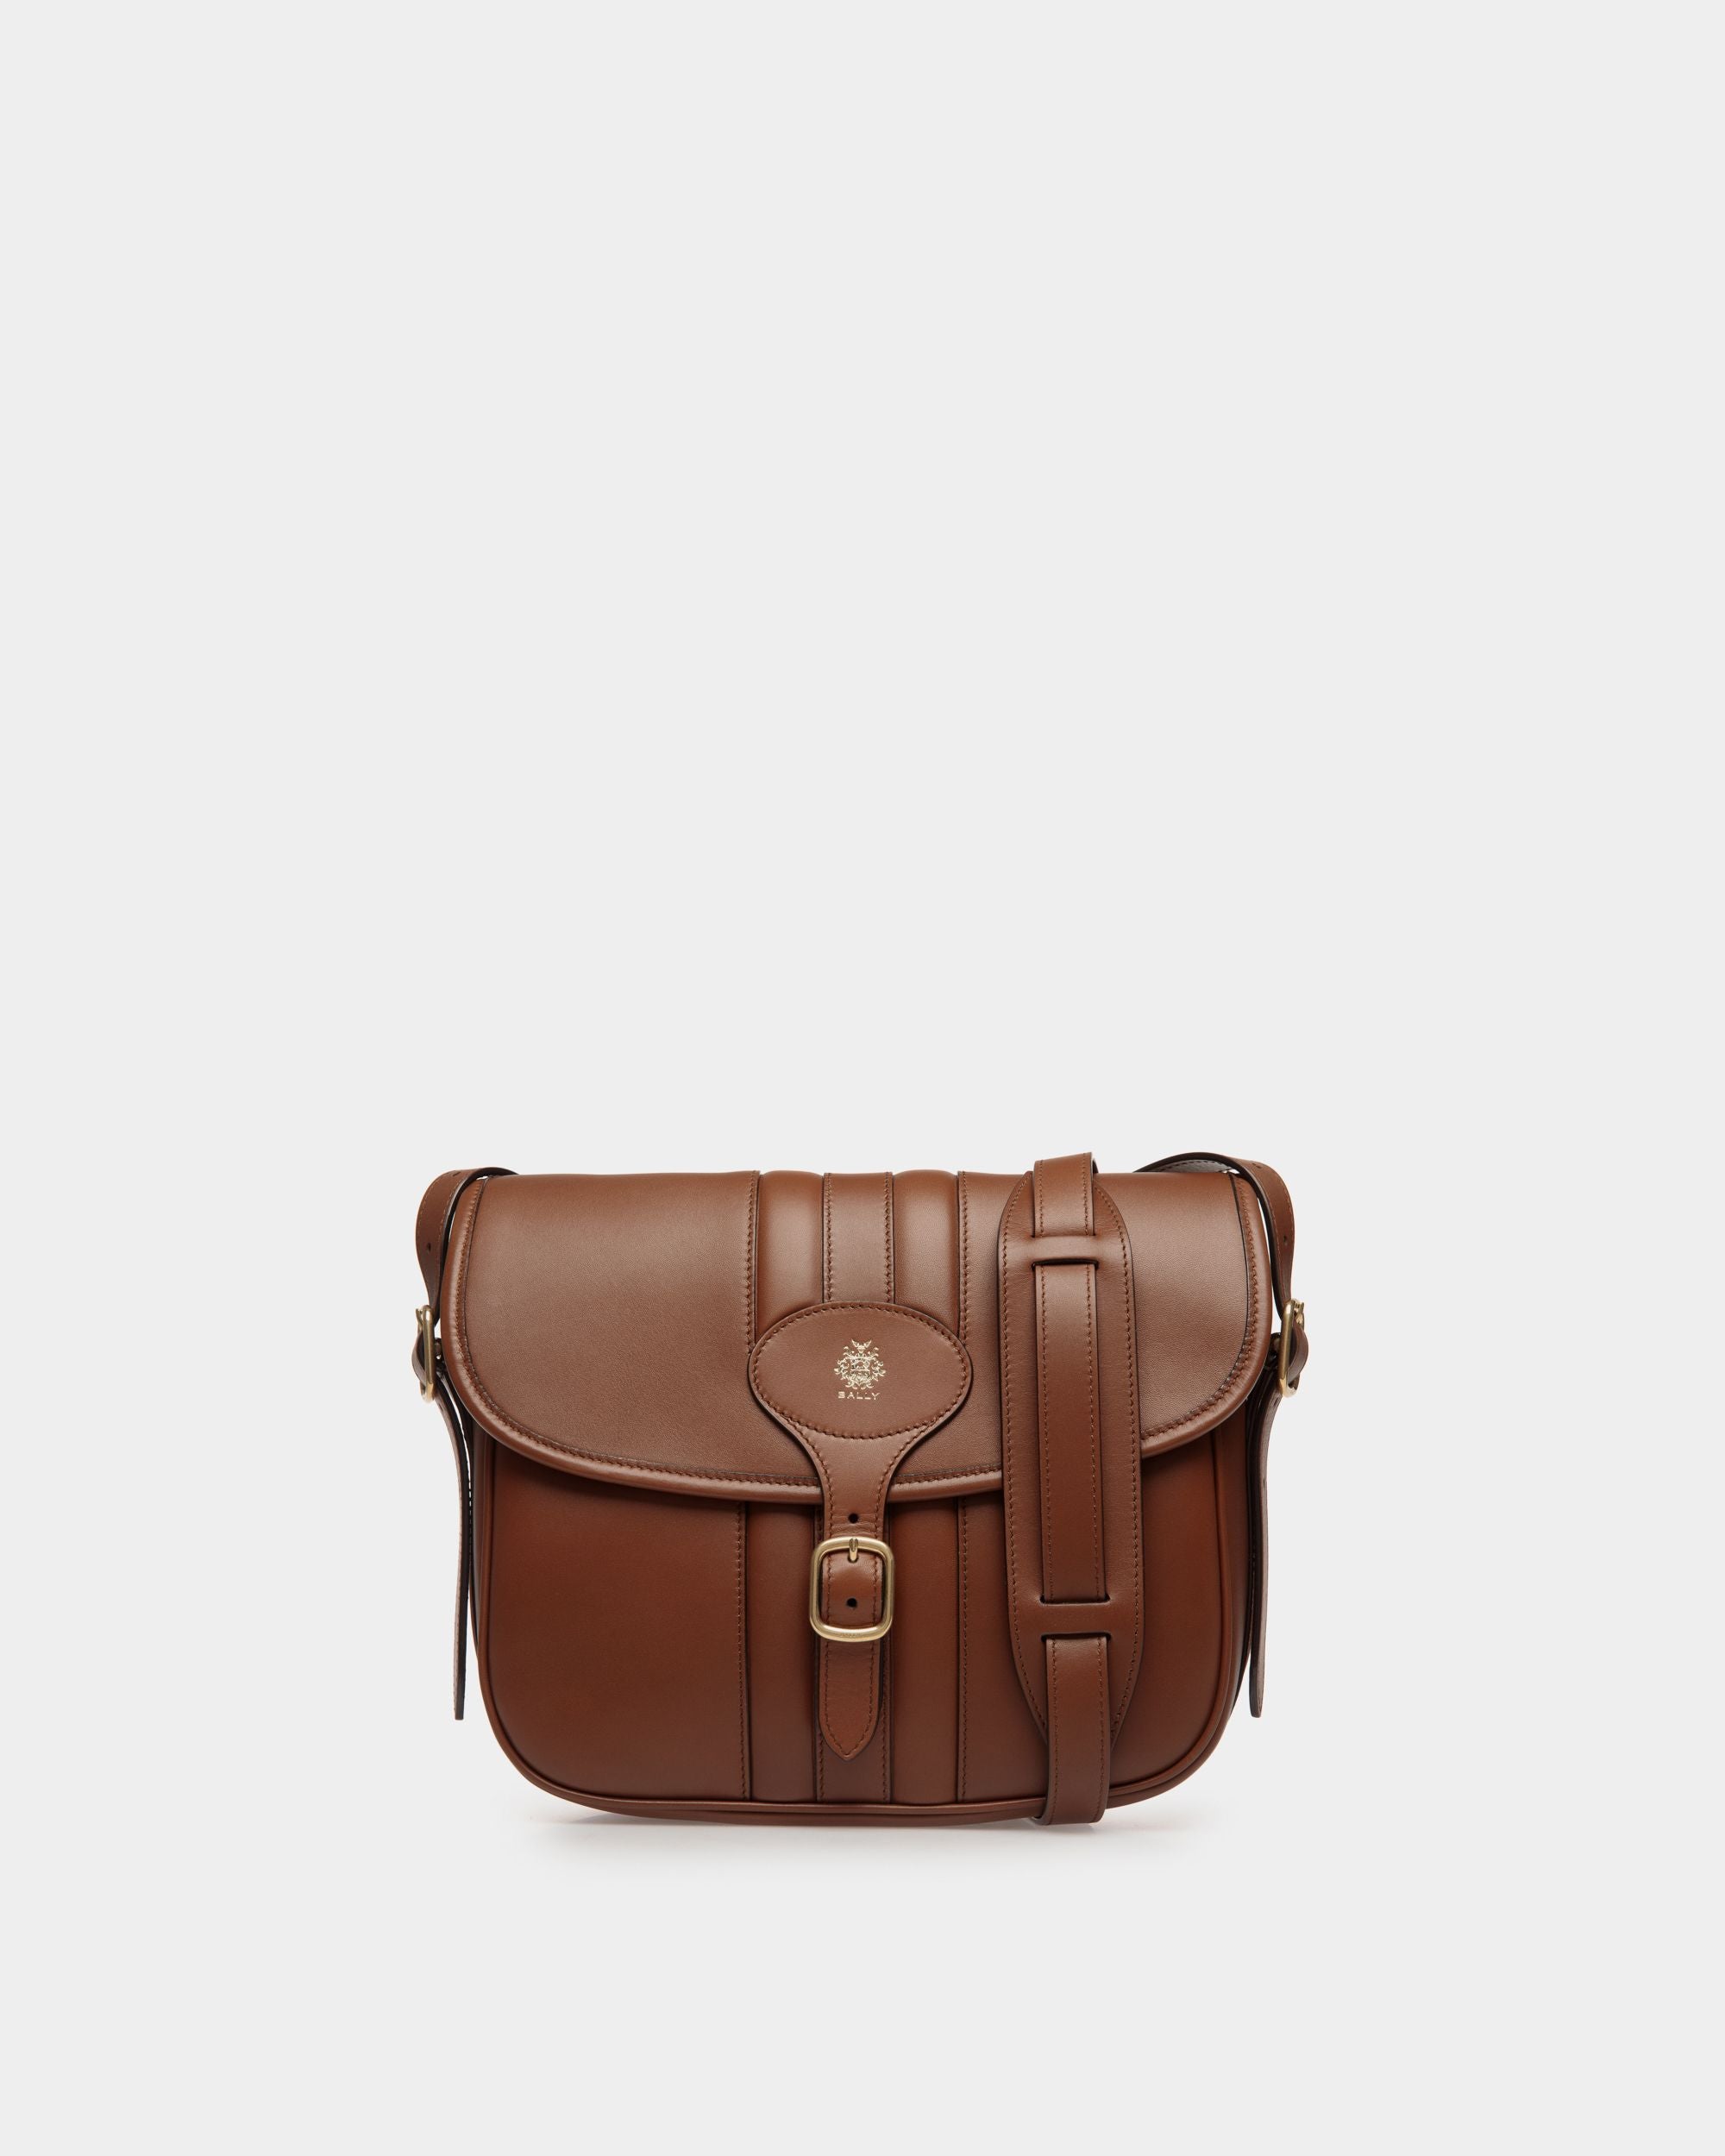 Beckett | Men's Crossbody Bag in Brown Leather | Bally | Still Life Front